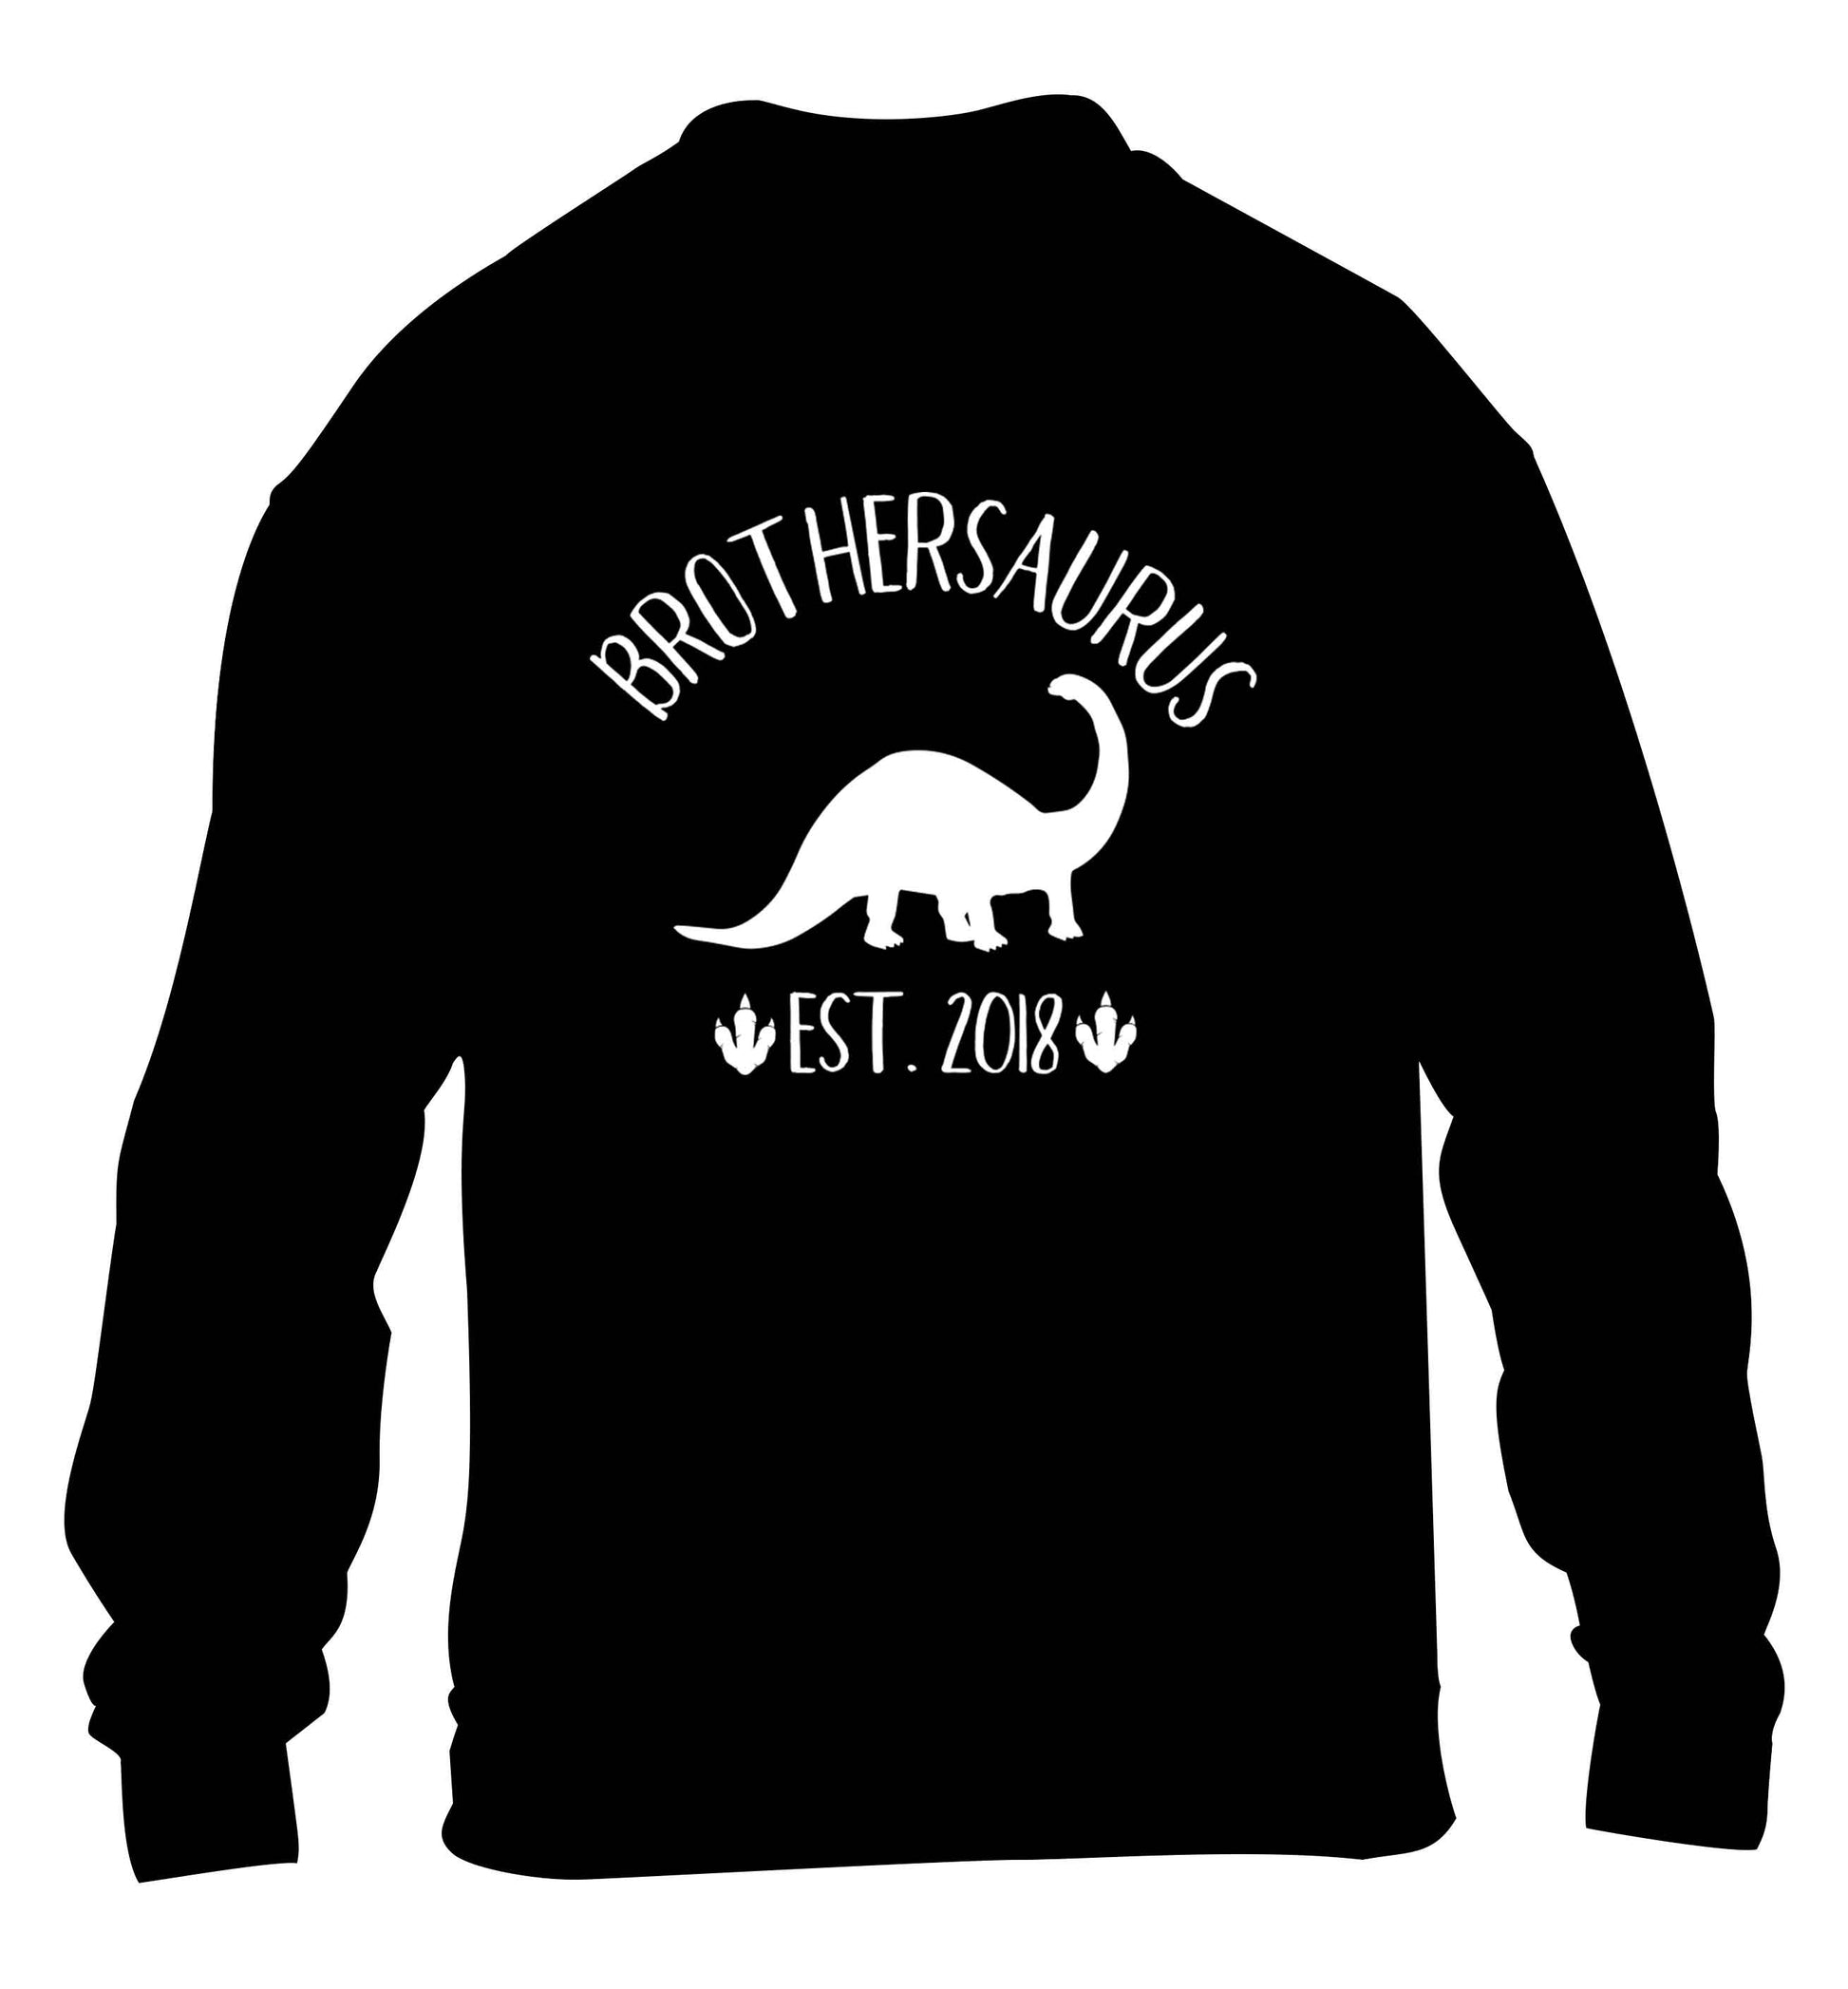 Personalised brothersaurus since (custom date) children's black sweater 12-13 Years